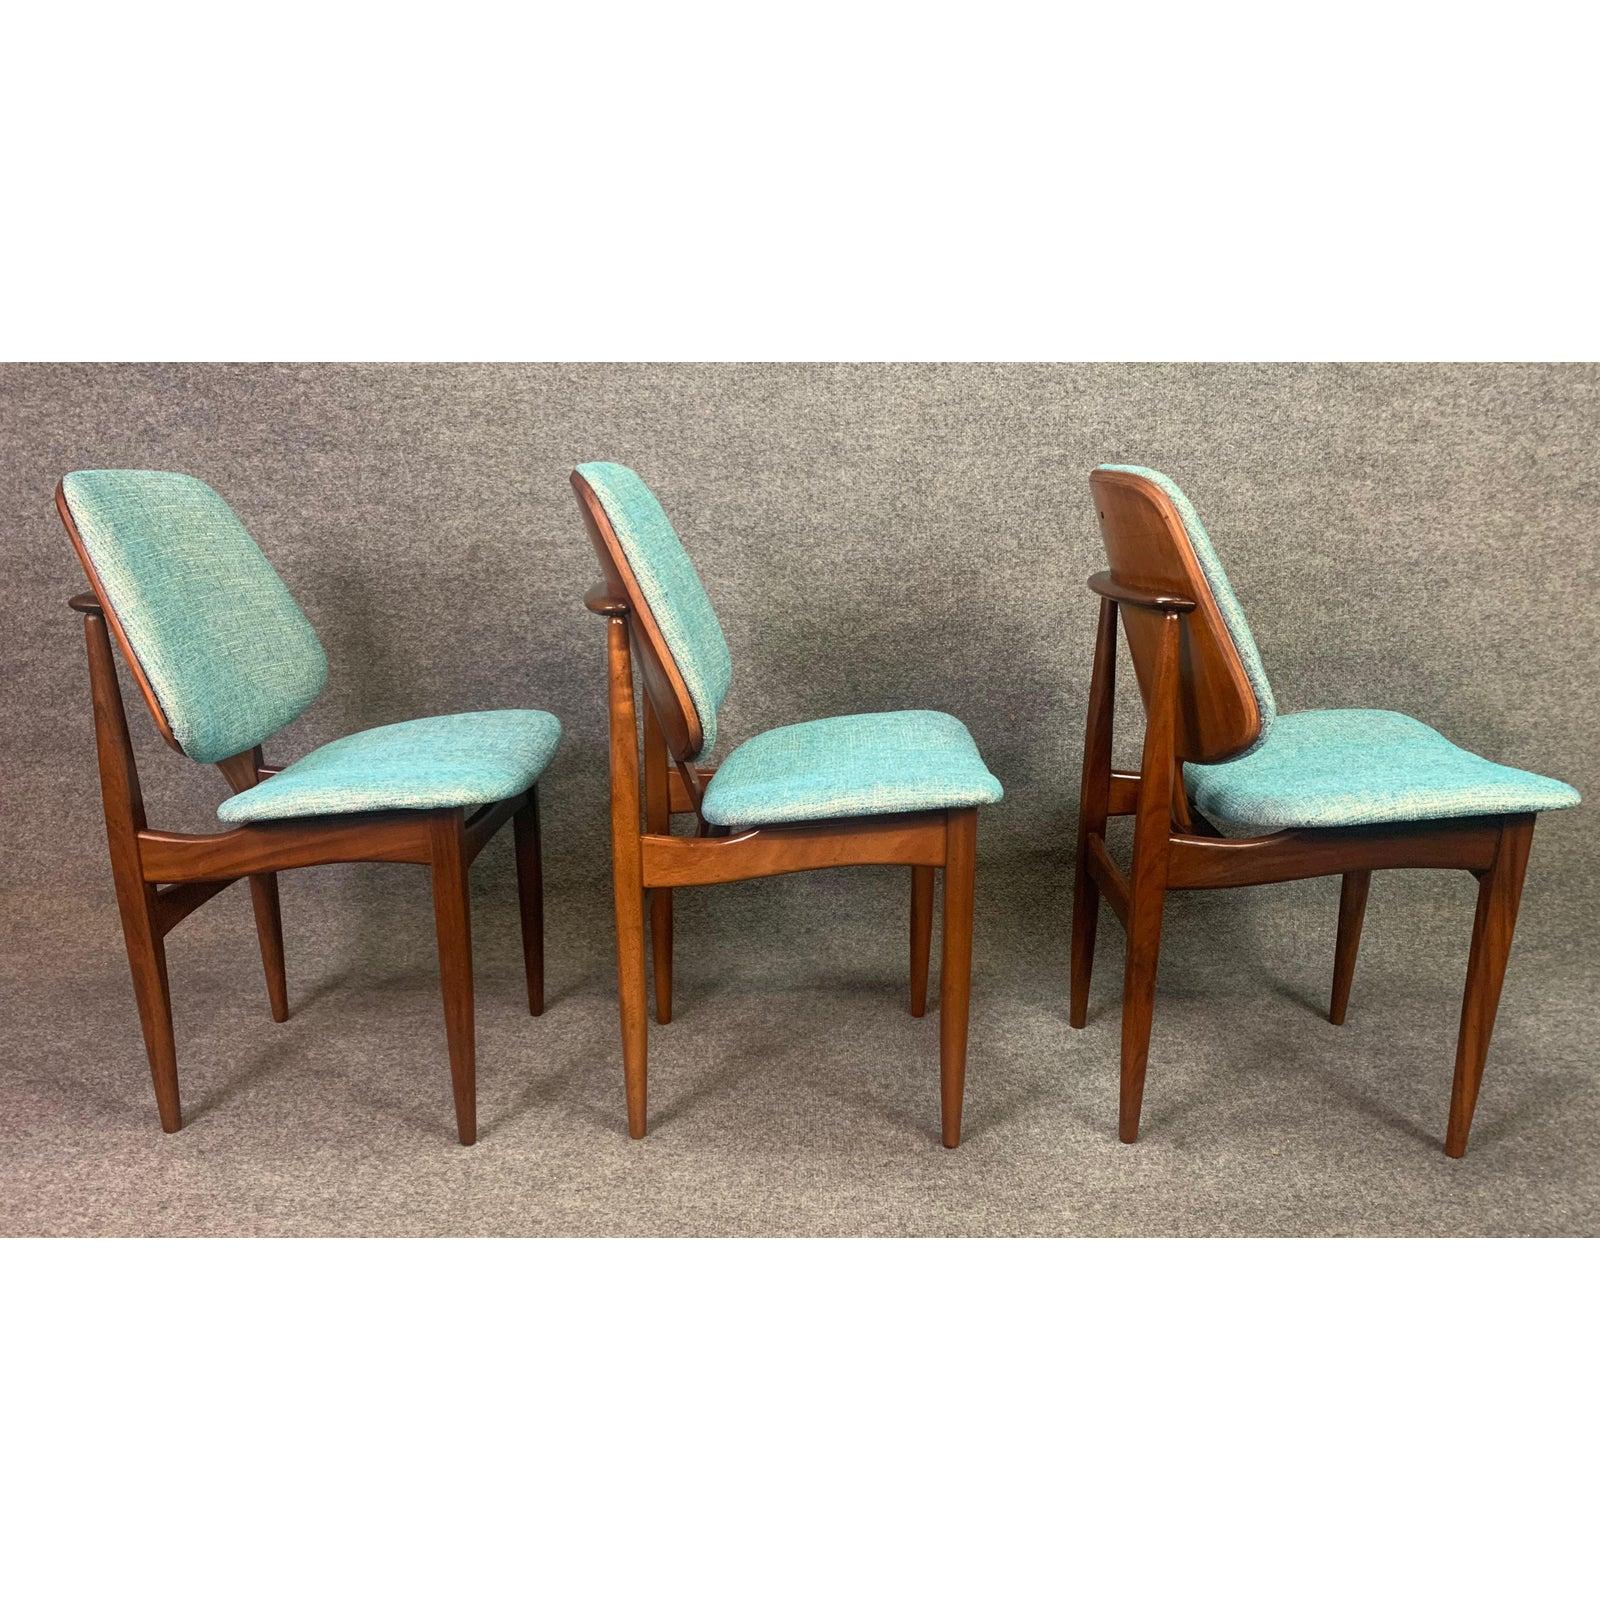 Mid-20th Century Vintage British Mid-Century Modern Teak Chairs by Elliotts of Newbury, Set of 6